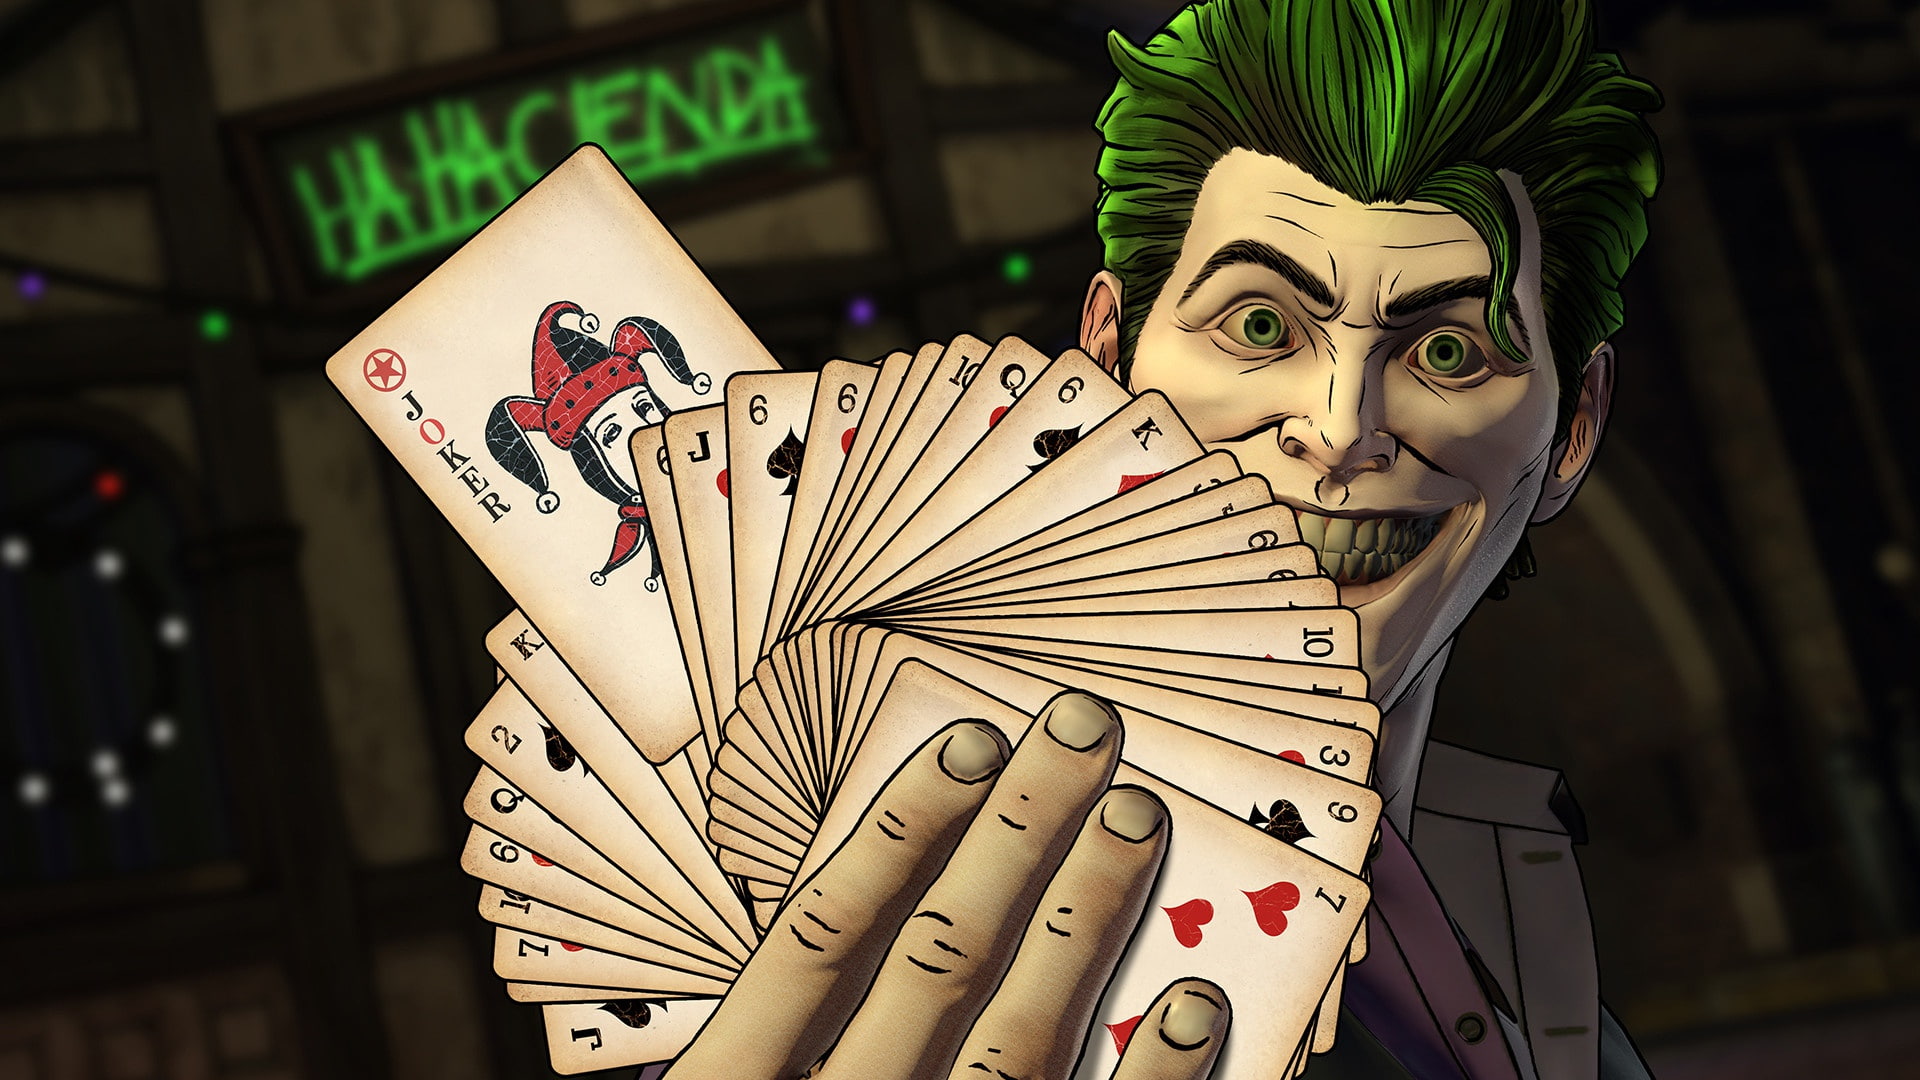 The game, Look, Card, Smile, Joker, Villain, DC Comics, Telltale Games